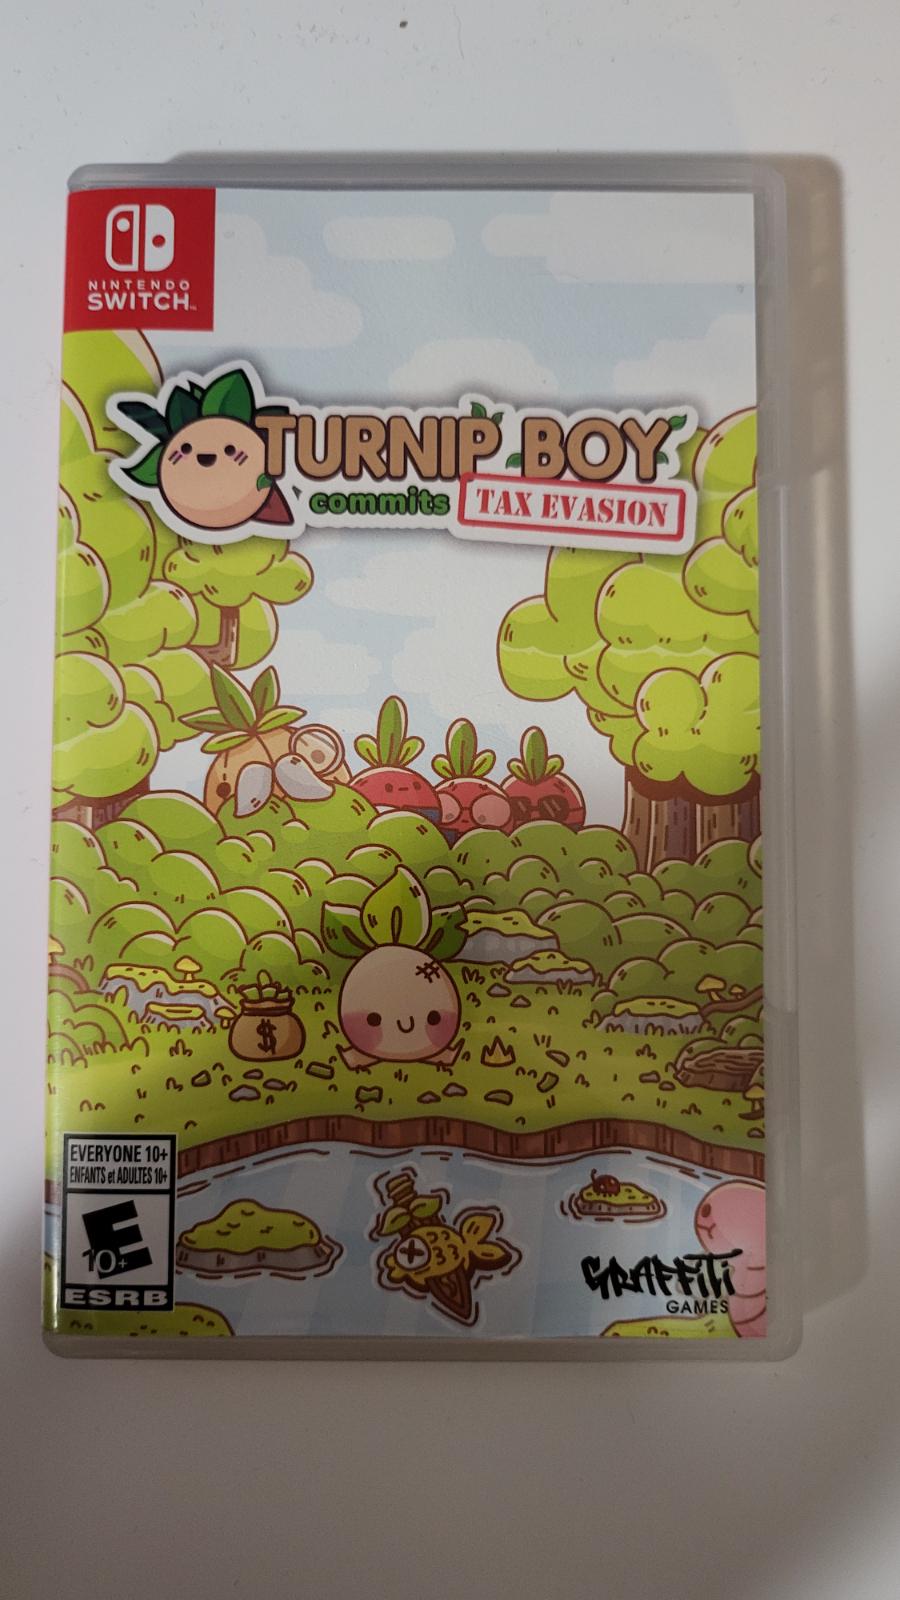 Turnip Boy Commits Tax Evasion | Item, Box, and Manual | Nintendo Switch